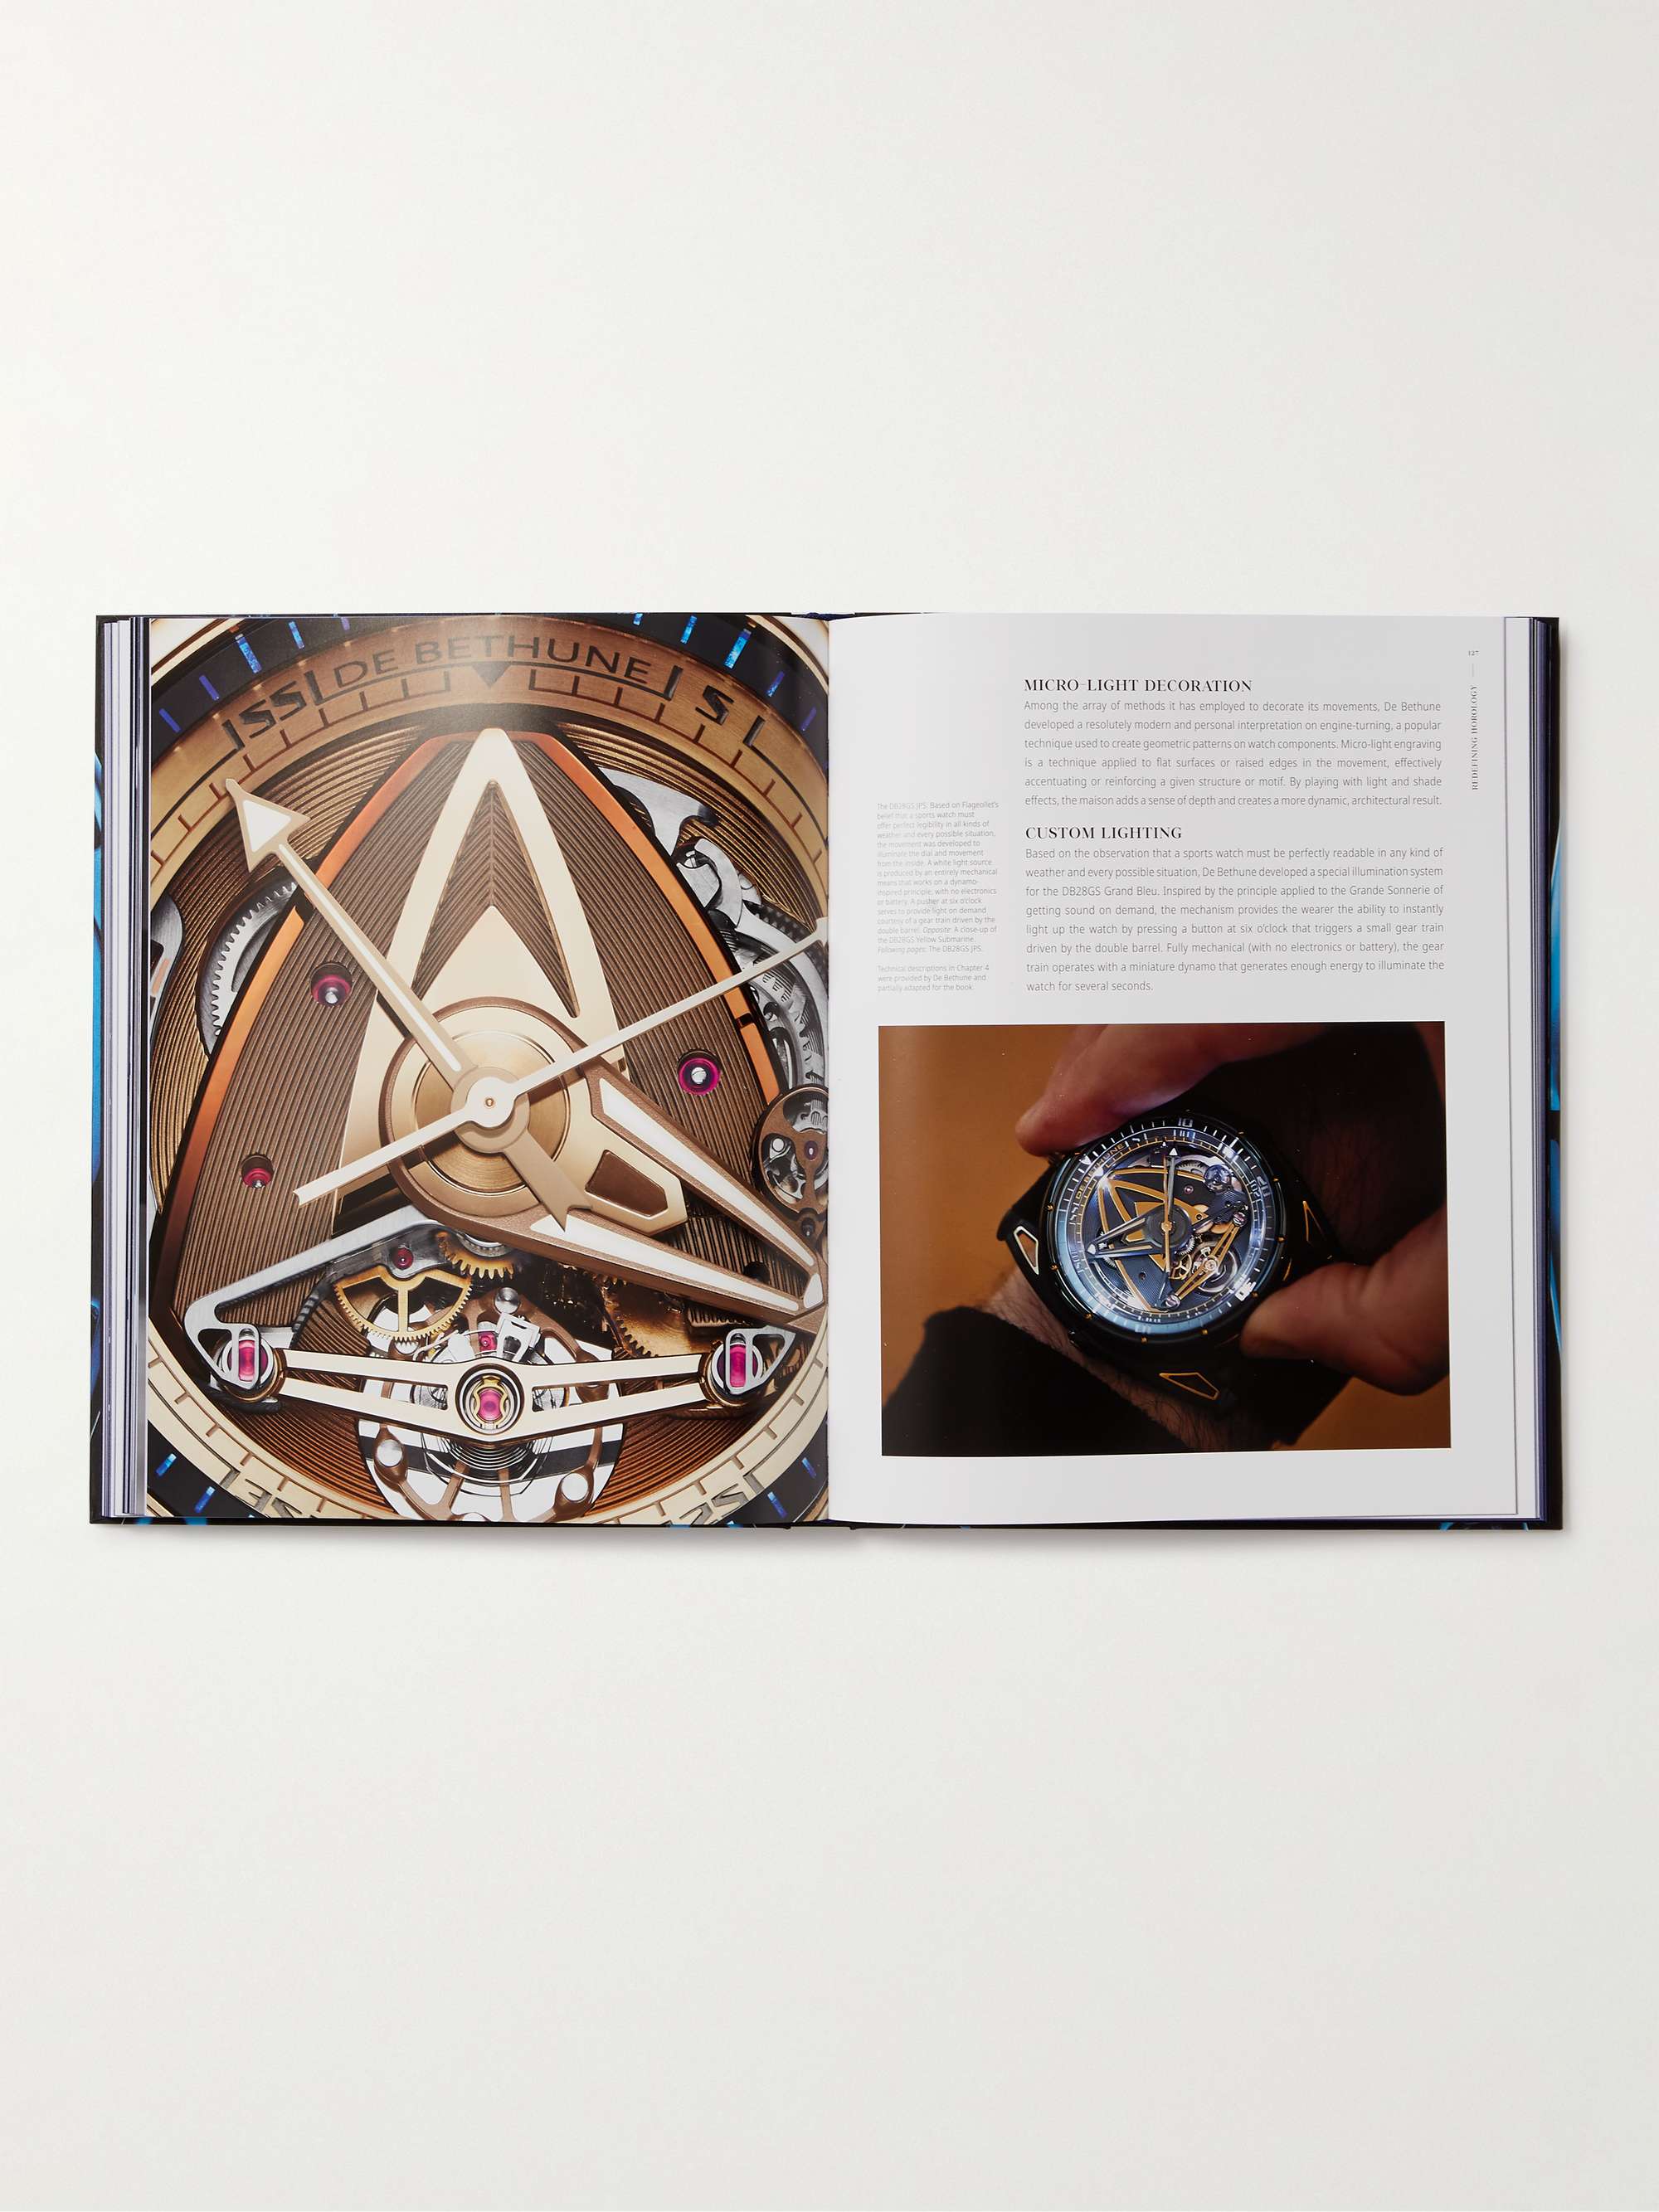 ASSOULINE De Bethune: The Art of Watchmaking Hardcover Book